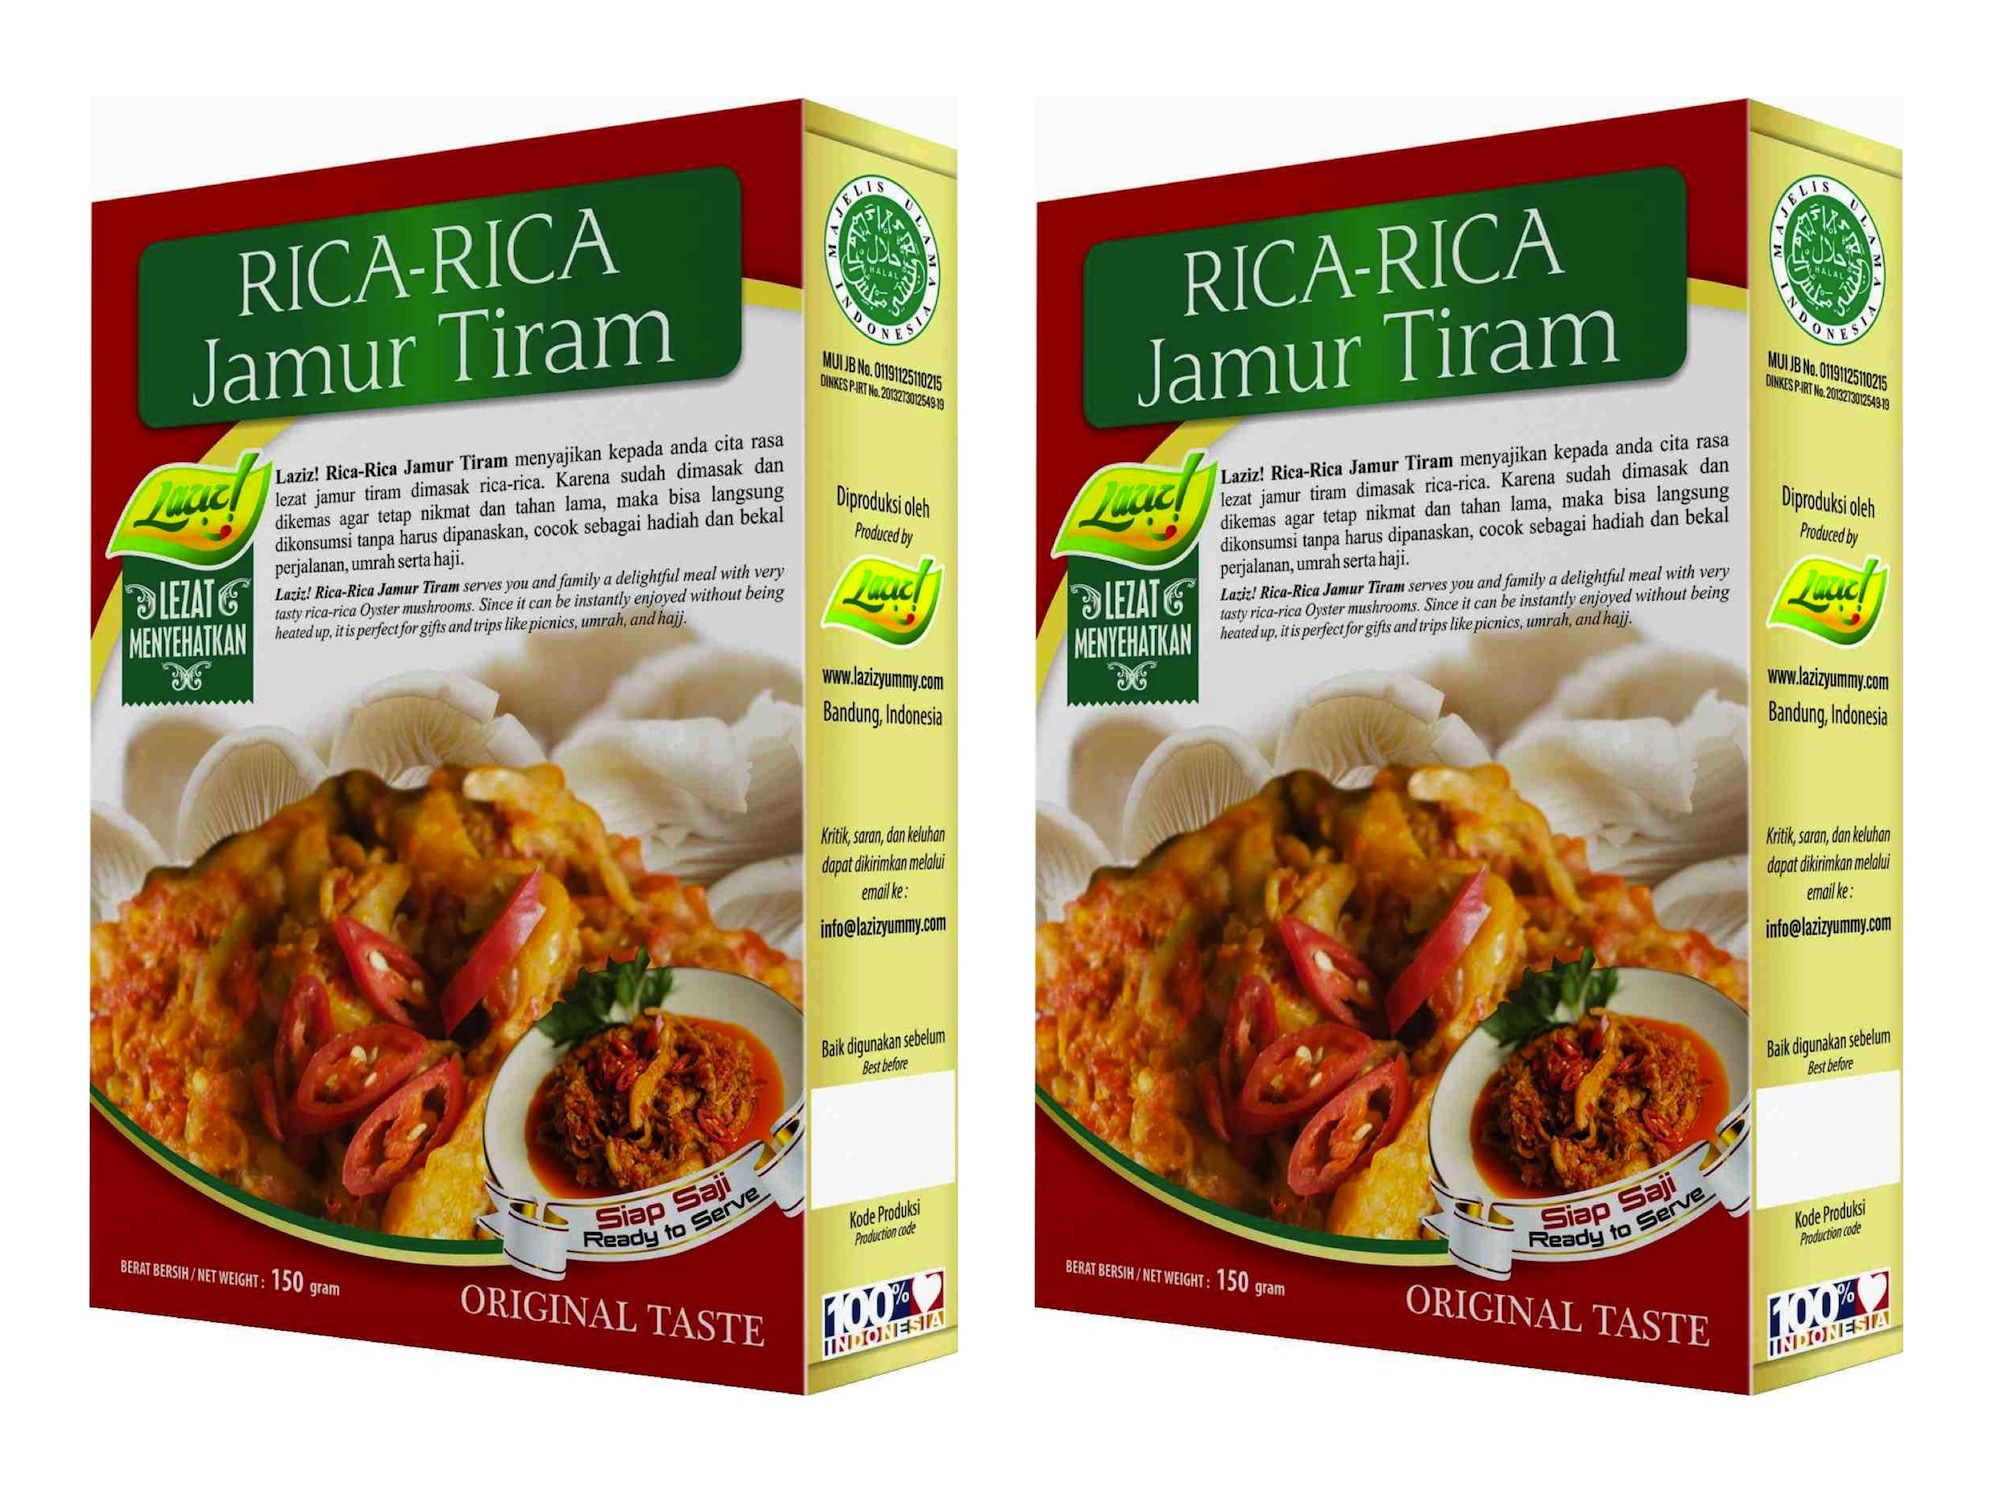 2 Rica-Rica Jamur Tiram